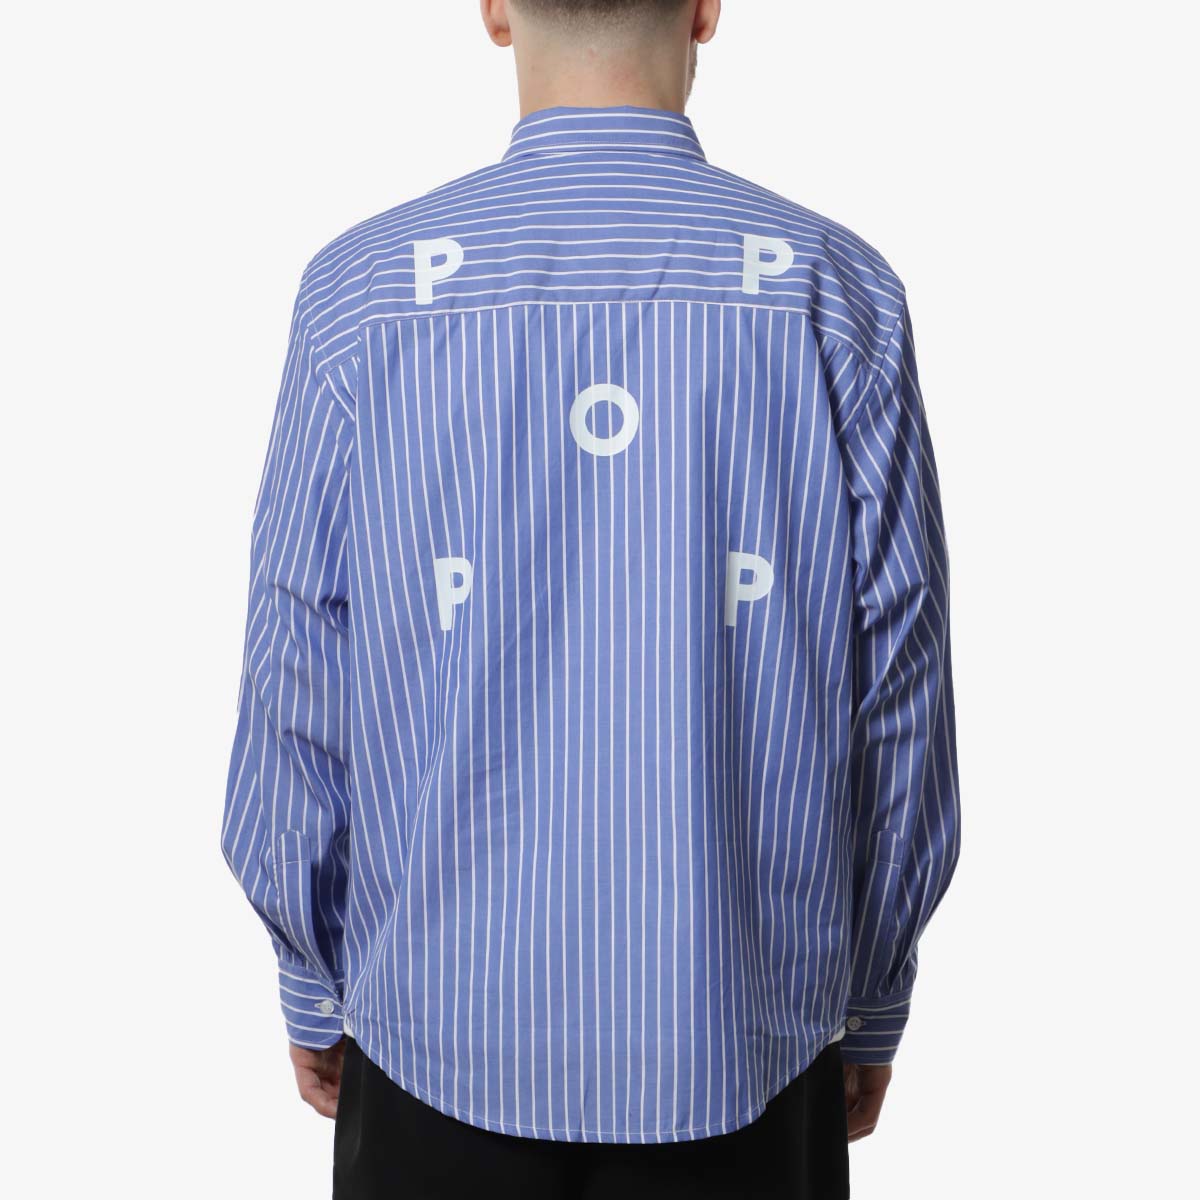 Pop Trading Company Logo Striped Shirt, Blue, Detail Shot 2